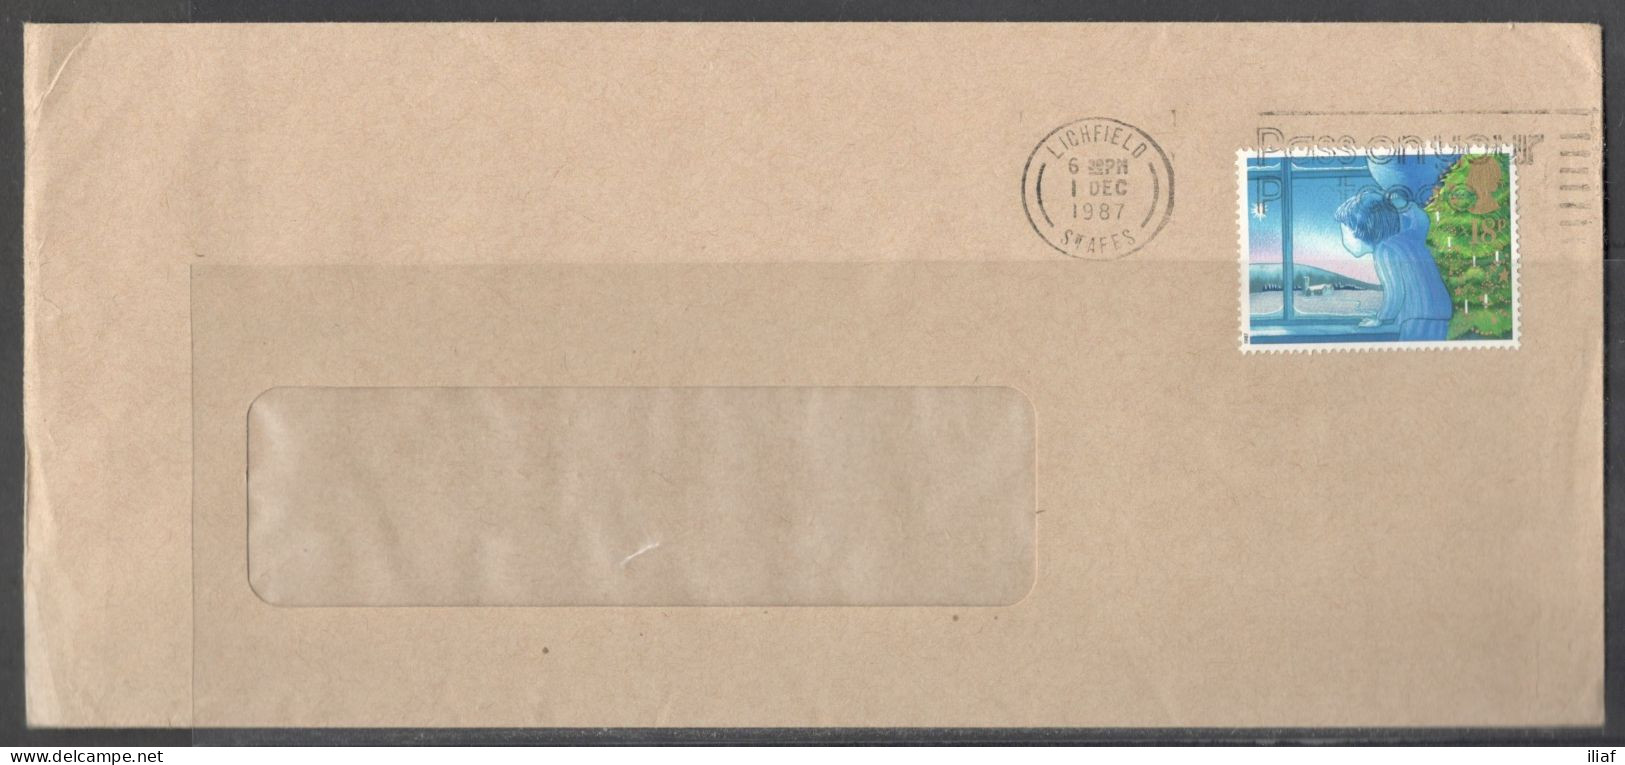 Great Britain - United Kingdom. Stamp Sc. 1197 On Letter, Sent From Lichfield On 1.12.87 - Briefe U. Dokumente